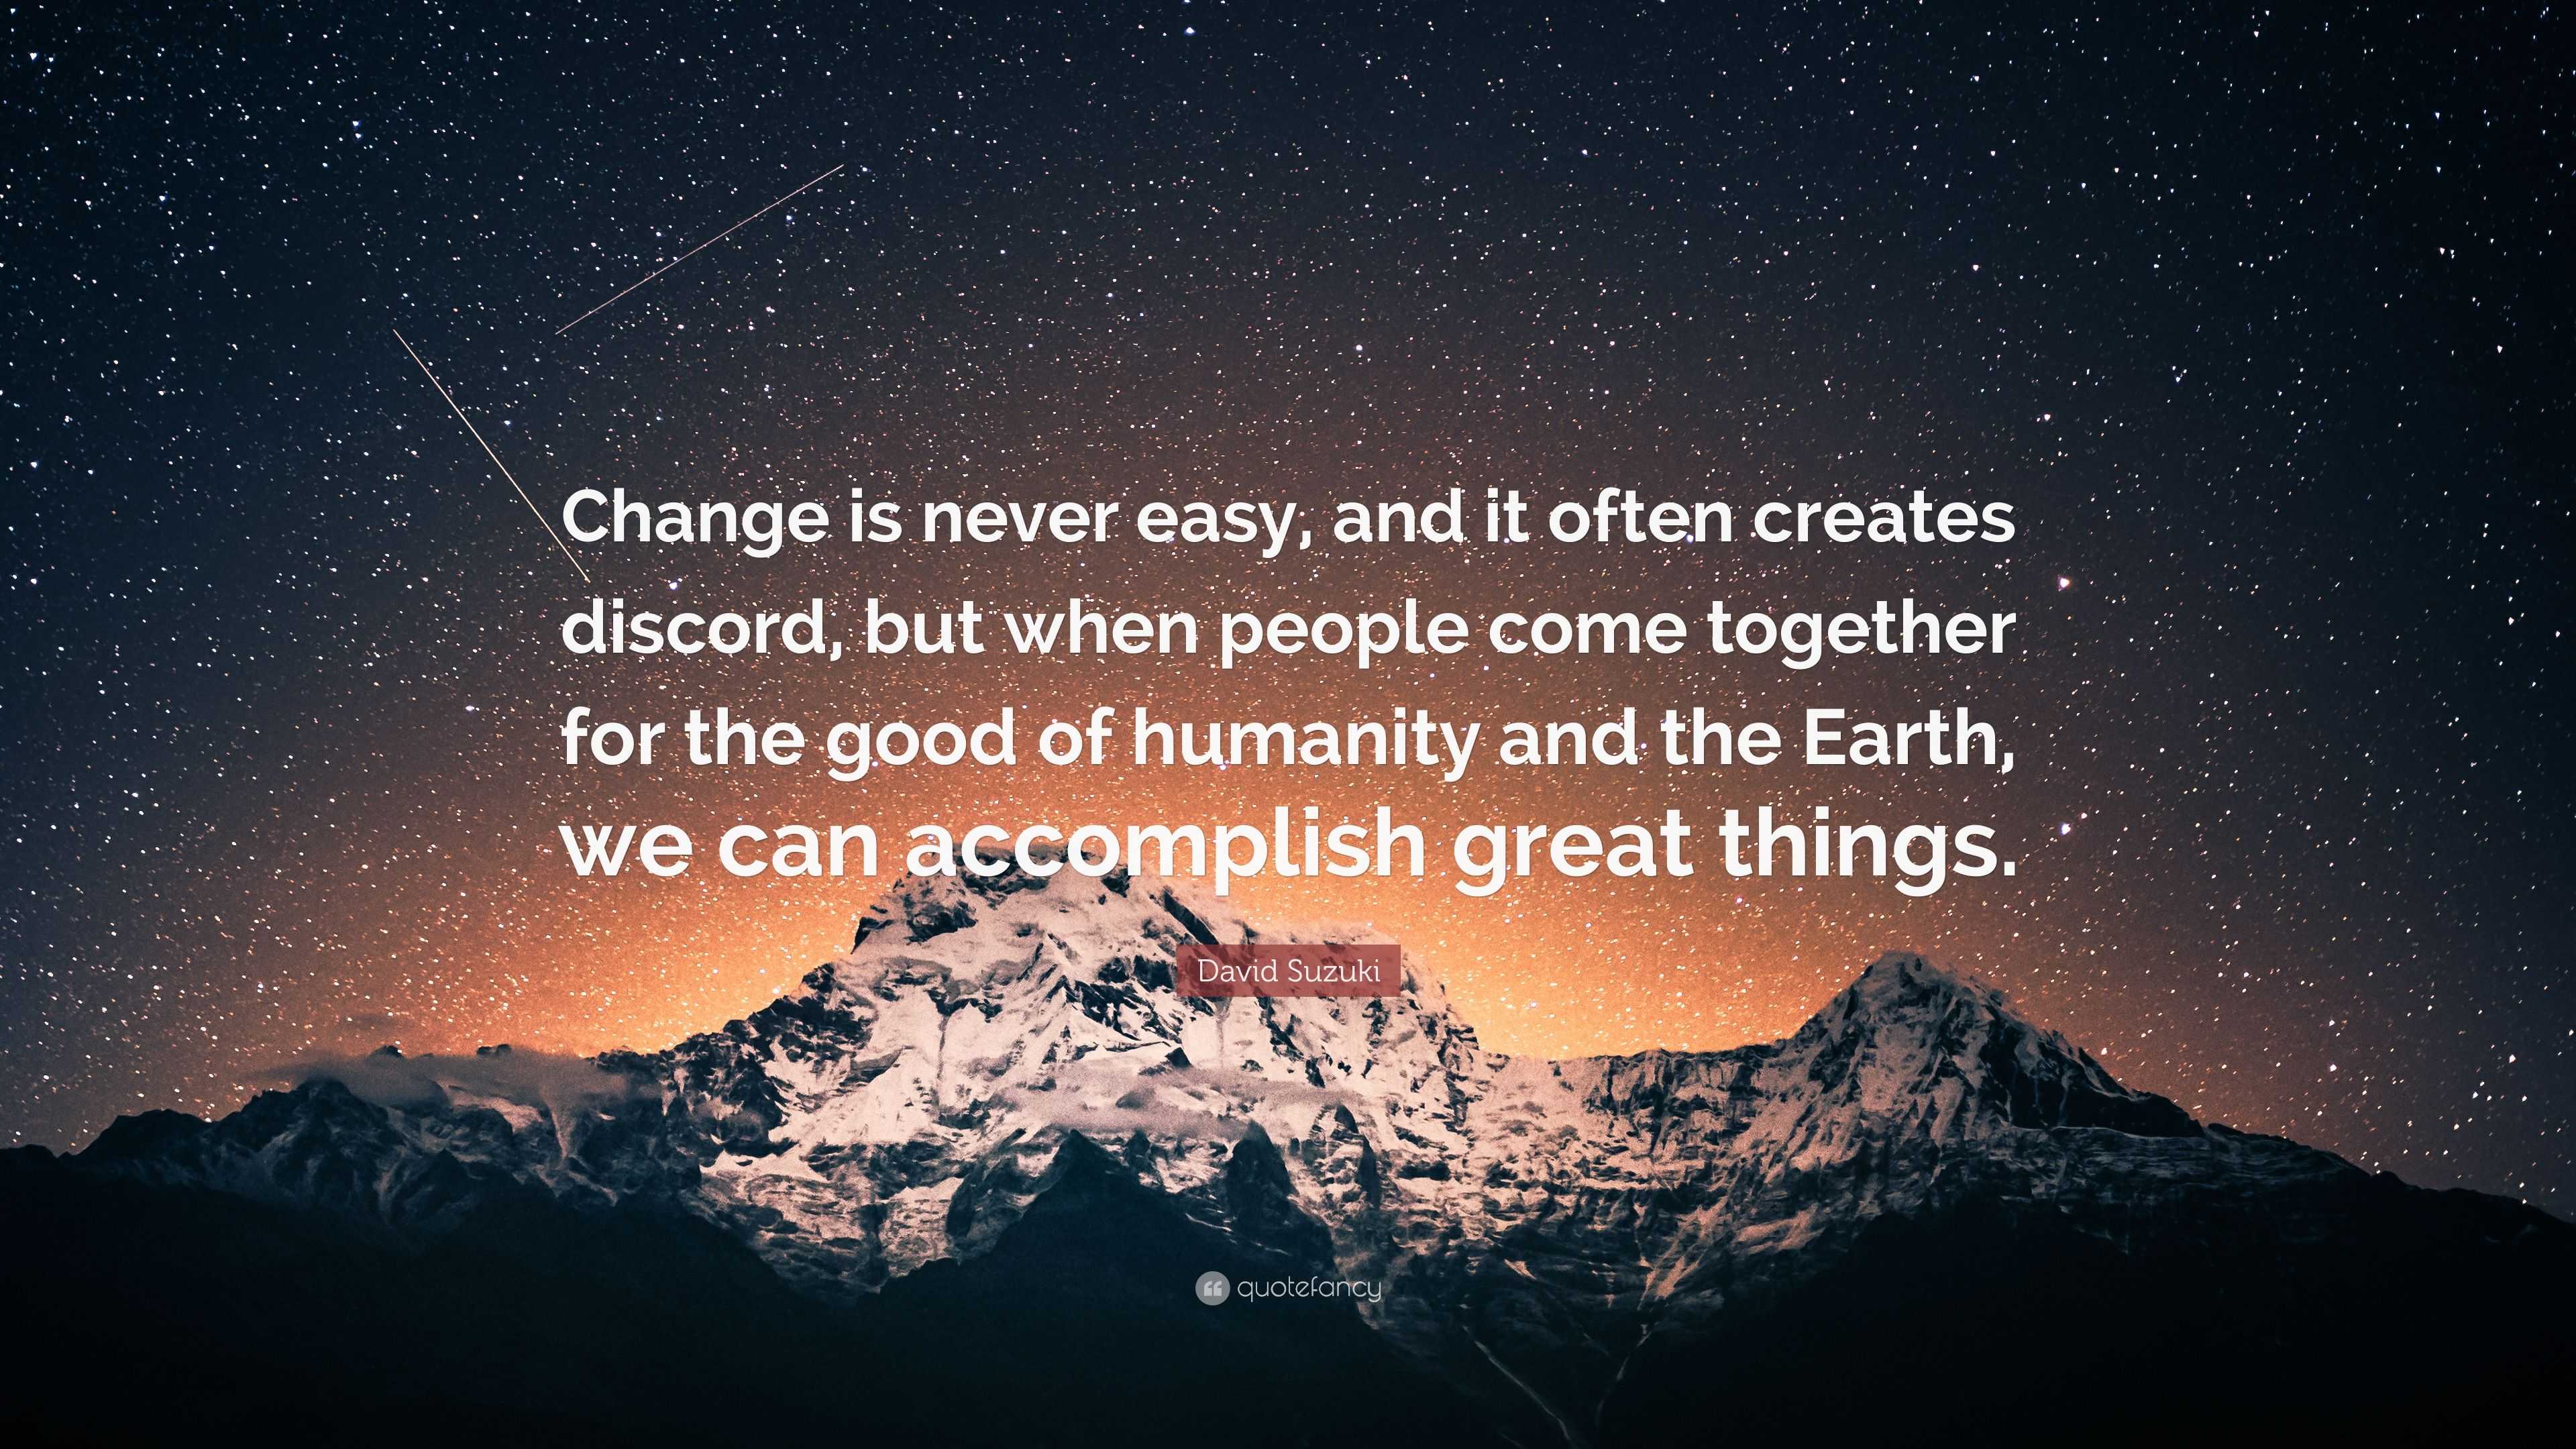 David Suzuki Quote: “Change is never easy, and it often creates discord ...